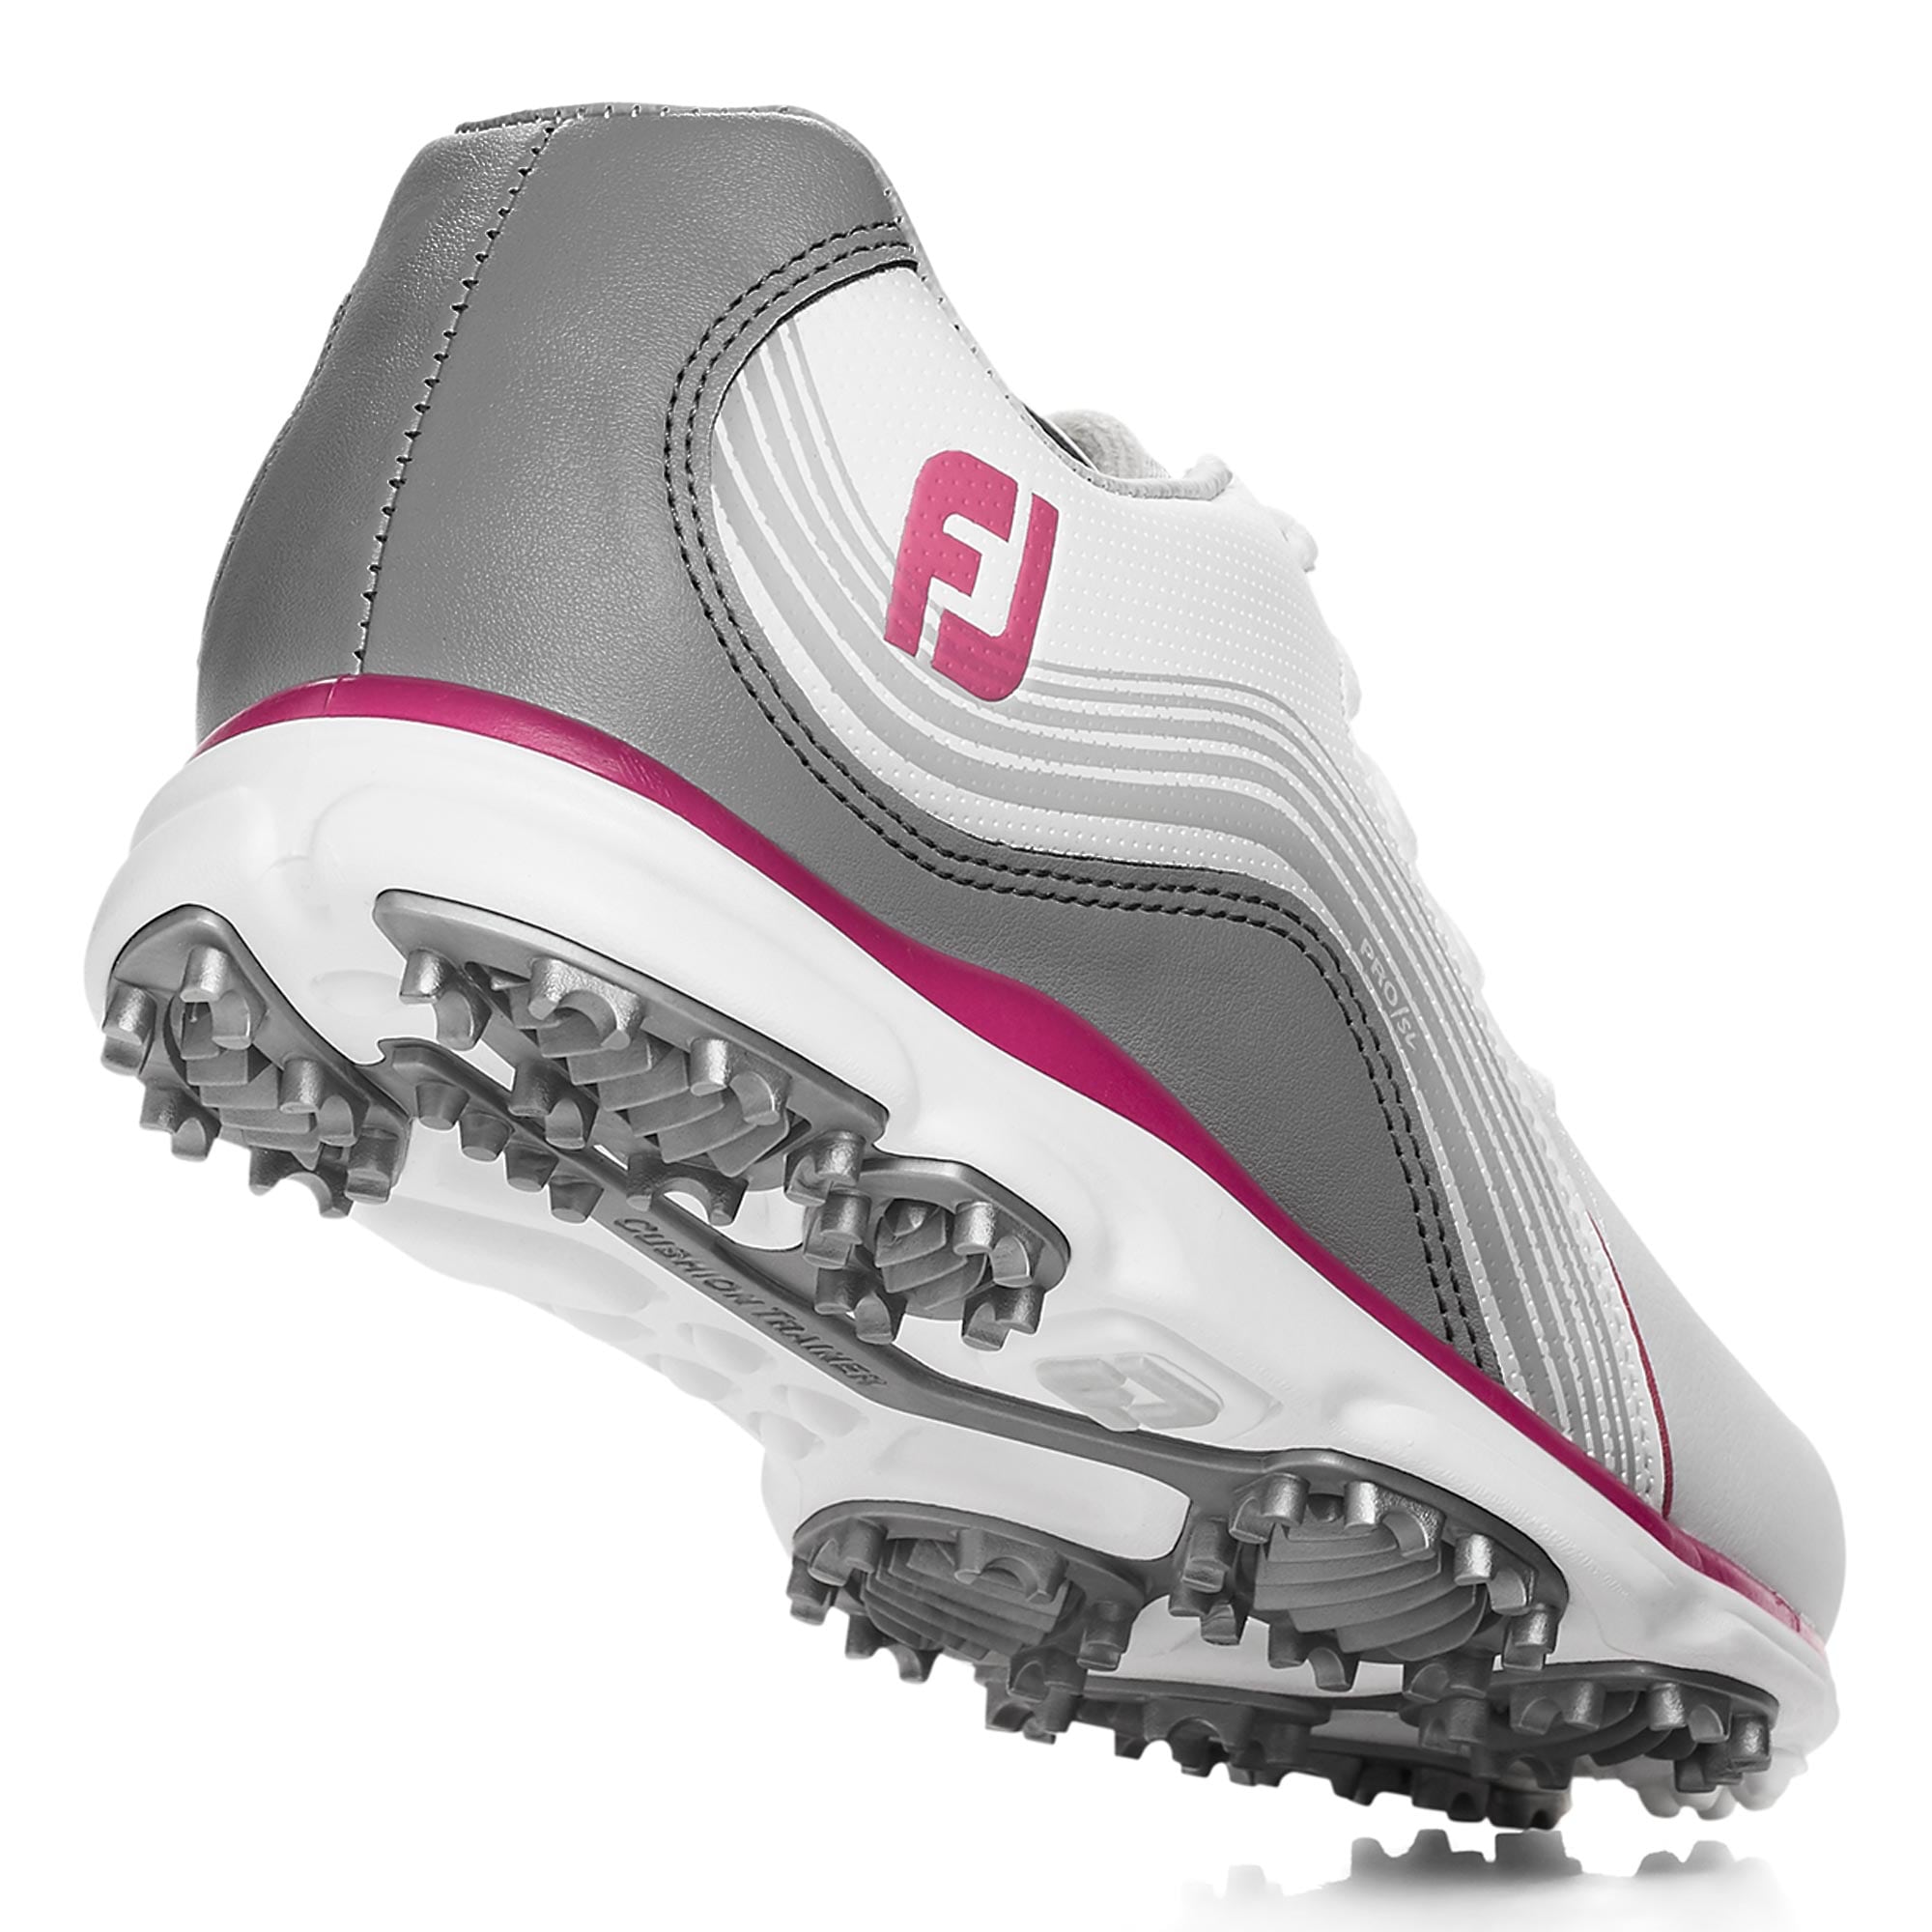 Pro/SL Women's Golf Shoes | FootJoy